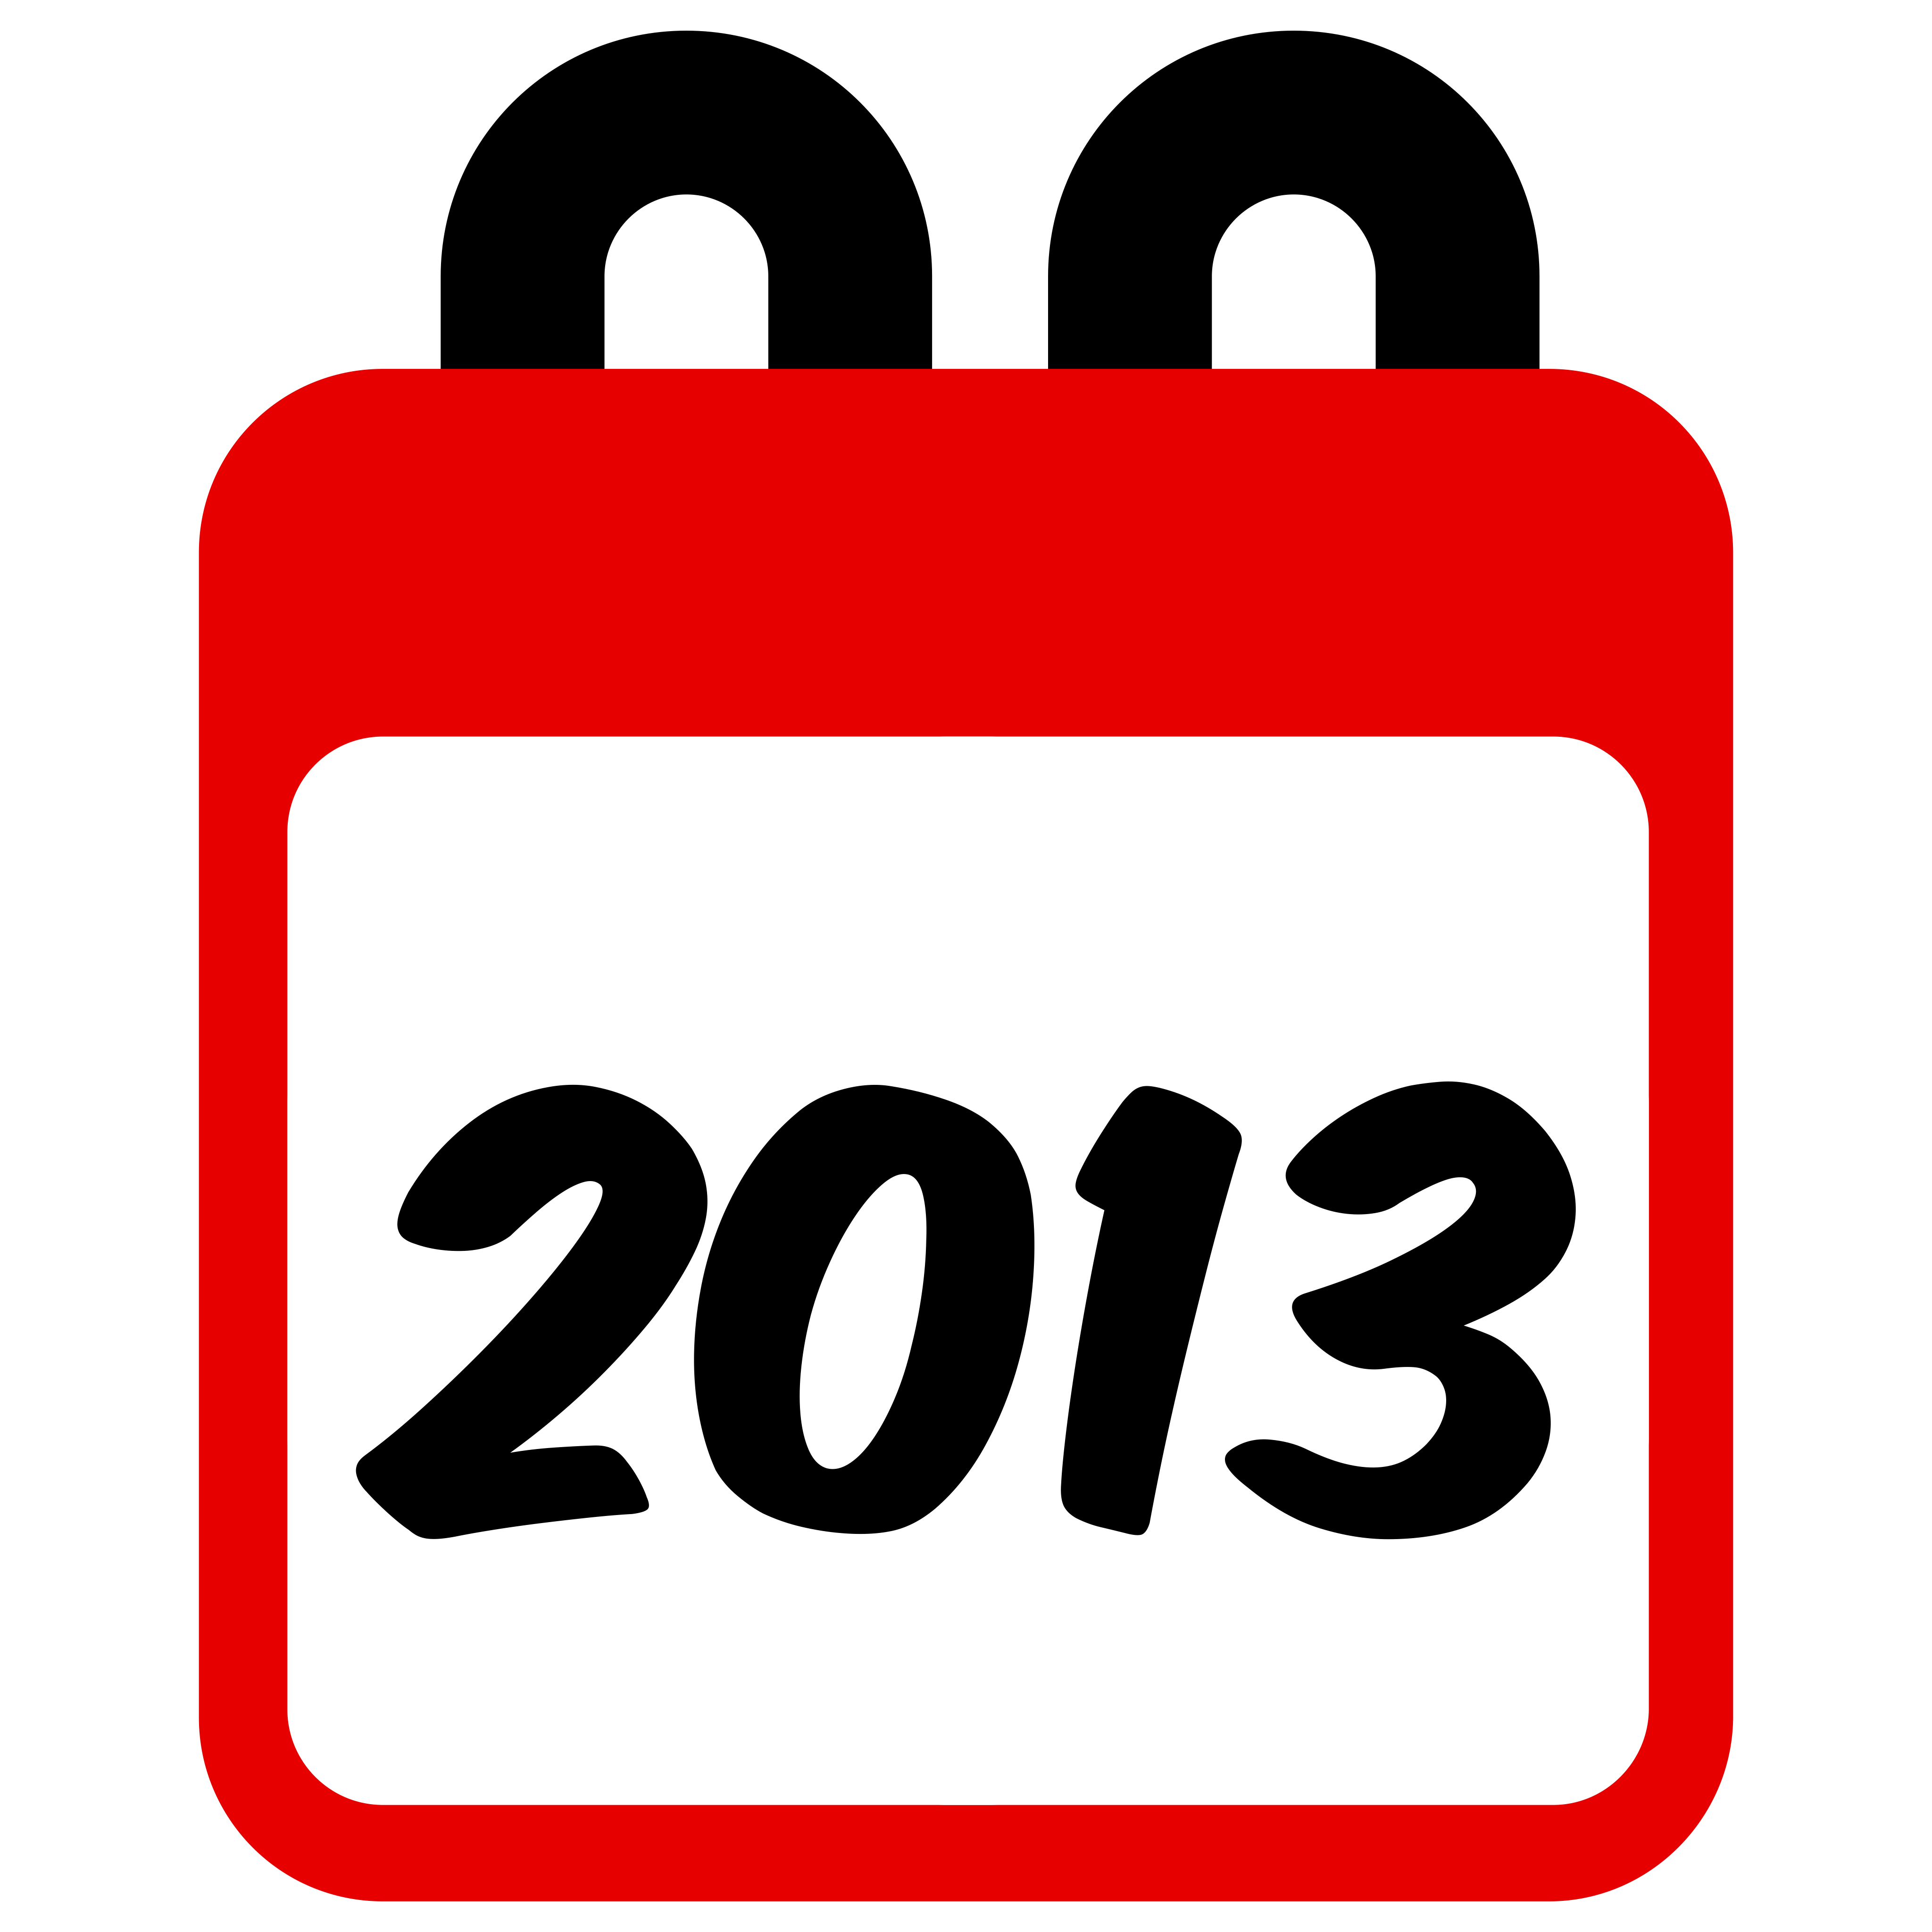 2013 Calendar Graphic